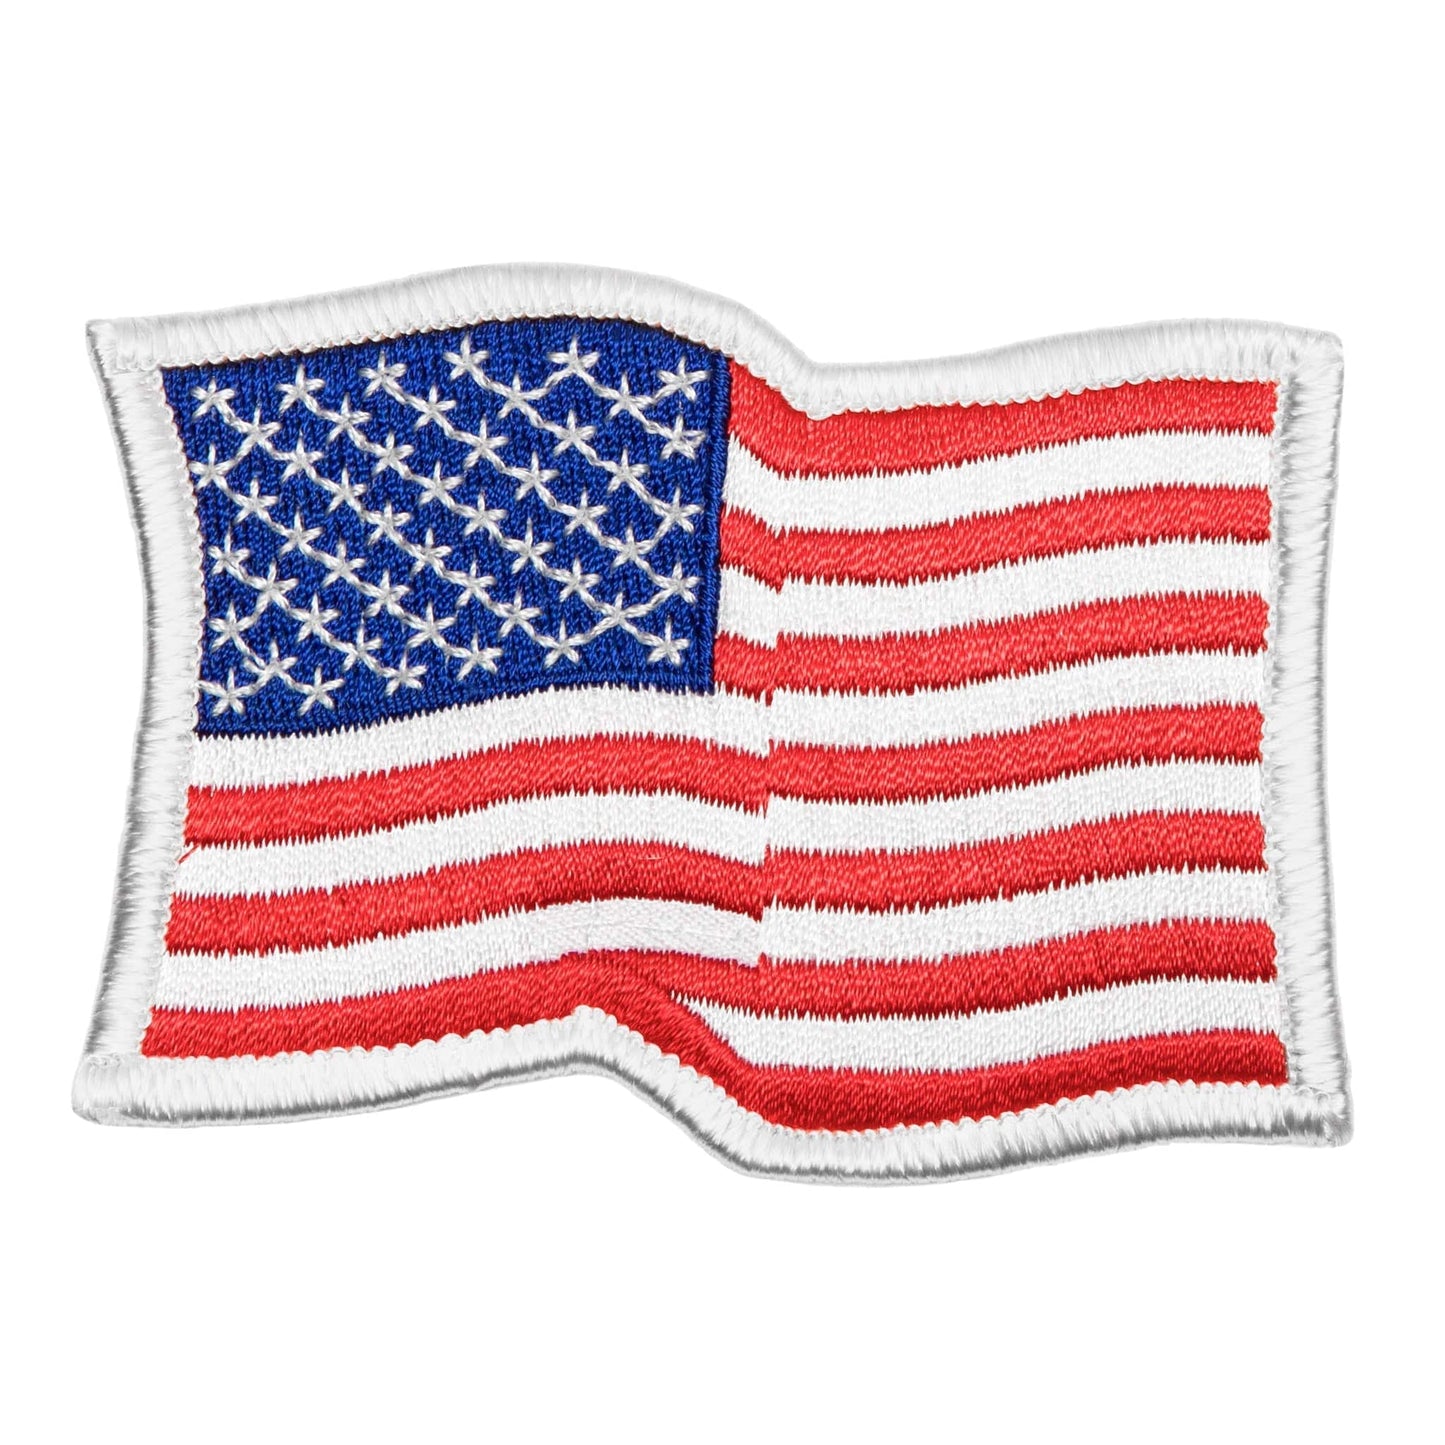 EclipseMartialArtsSupplies sporting goods USA American Waving Flag Patch Martial Arts Uniform Patch